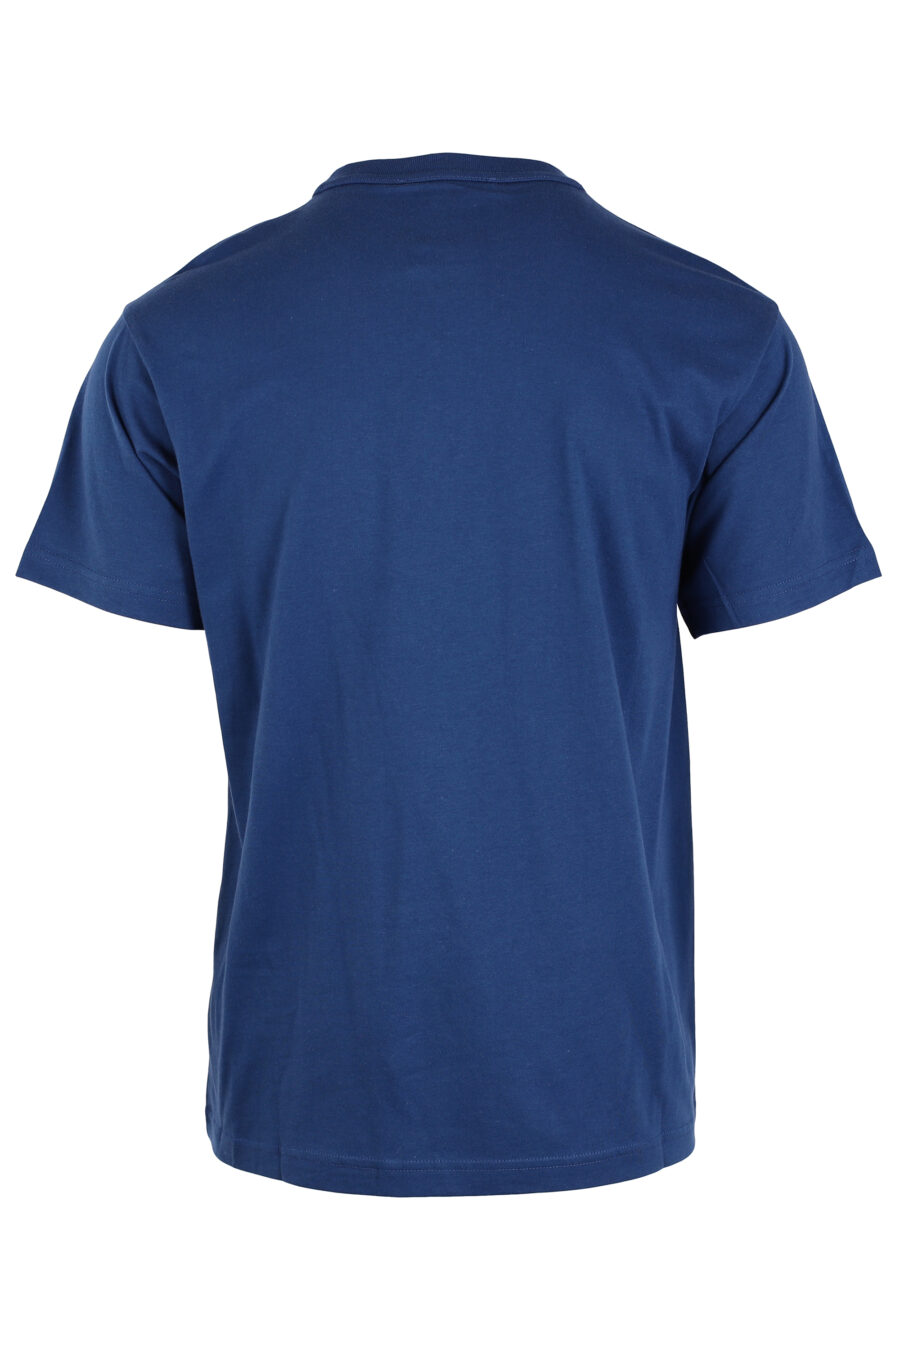 Camiseta azul marino con logo cuadrado centro tornasol verde - IMG 4037